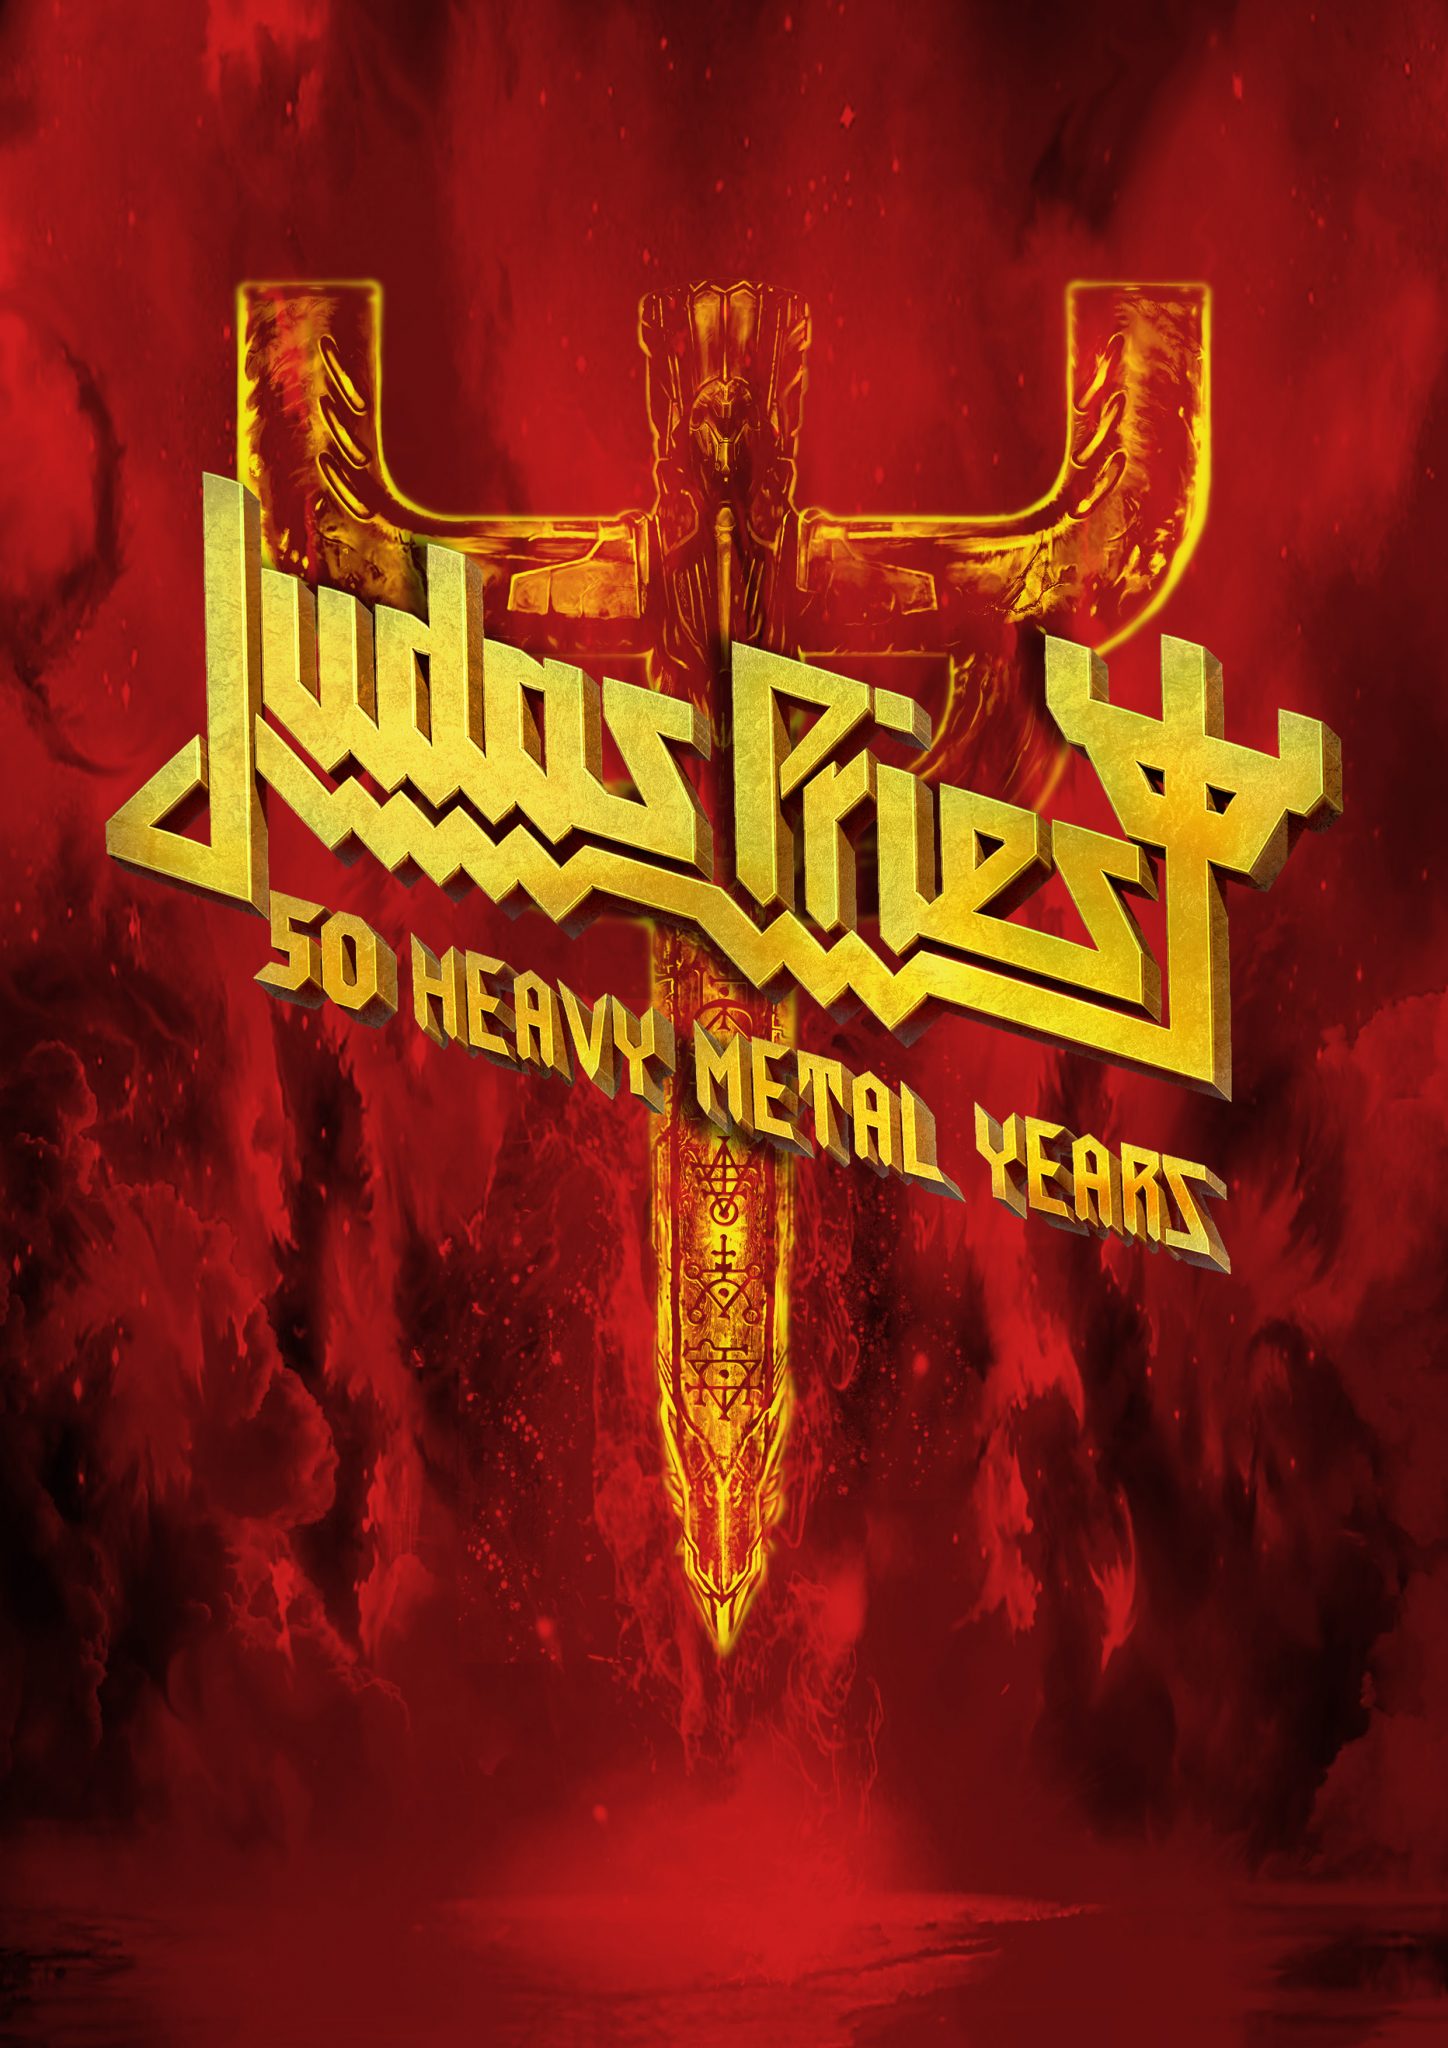 Judas Priest Announce Rescheduled 50 Heavy Metal Years Tour - BPM